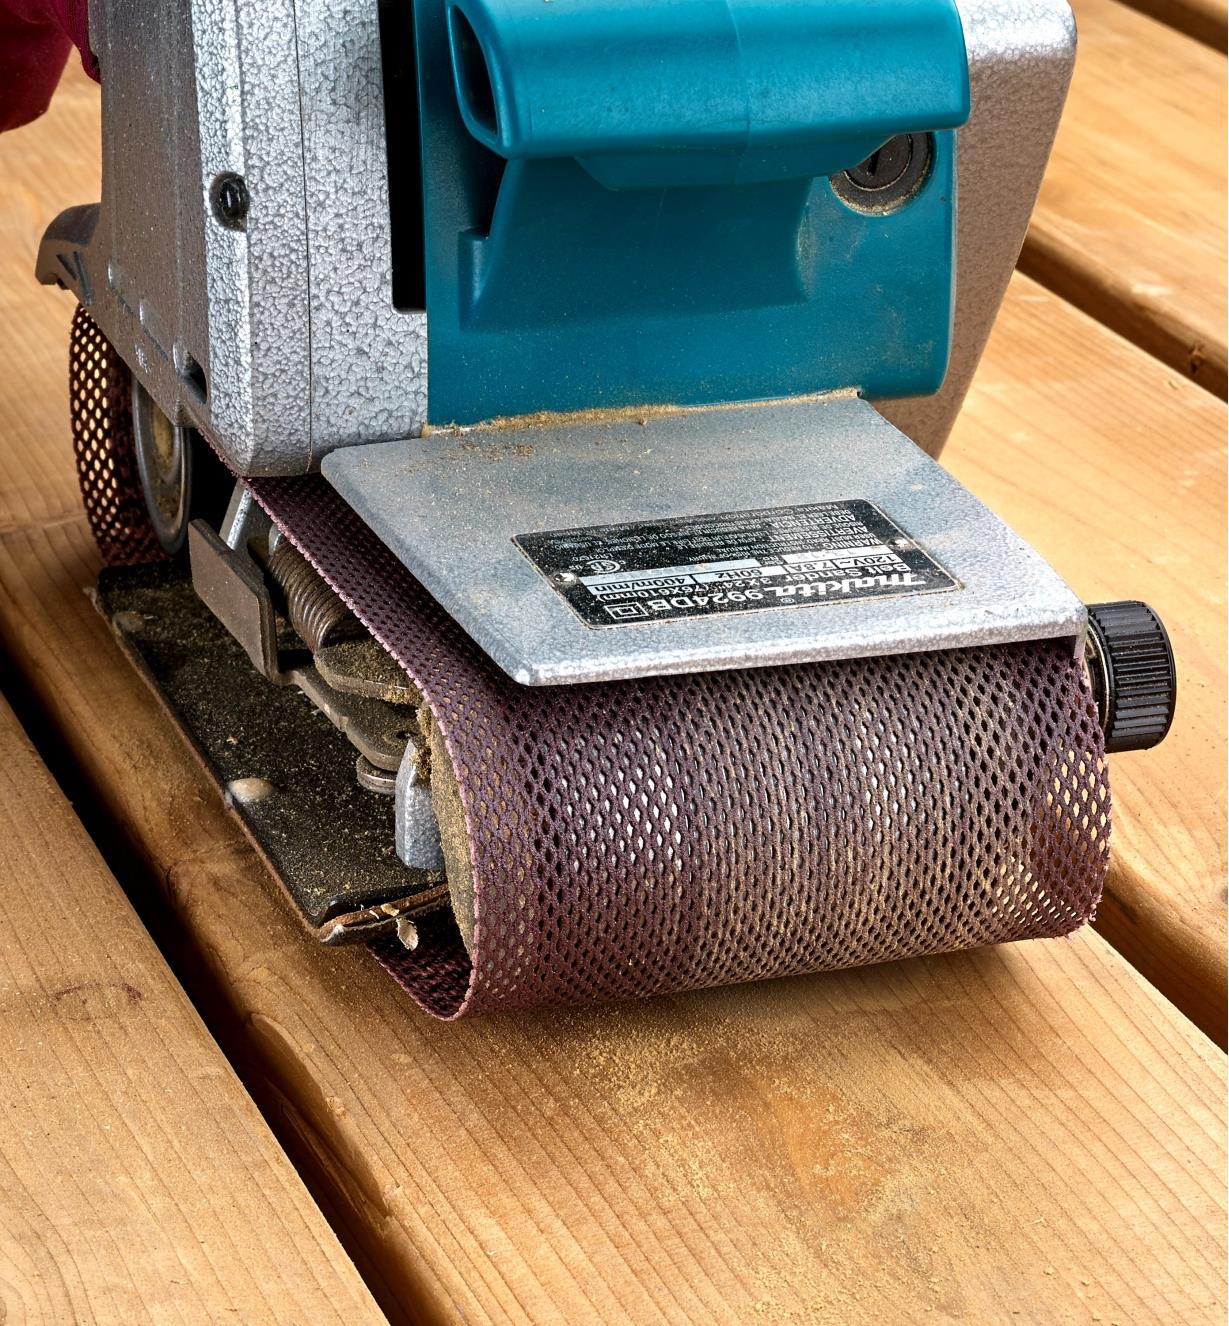 A Mirka Abranet belt on a belt sander being used to sand deck boards